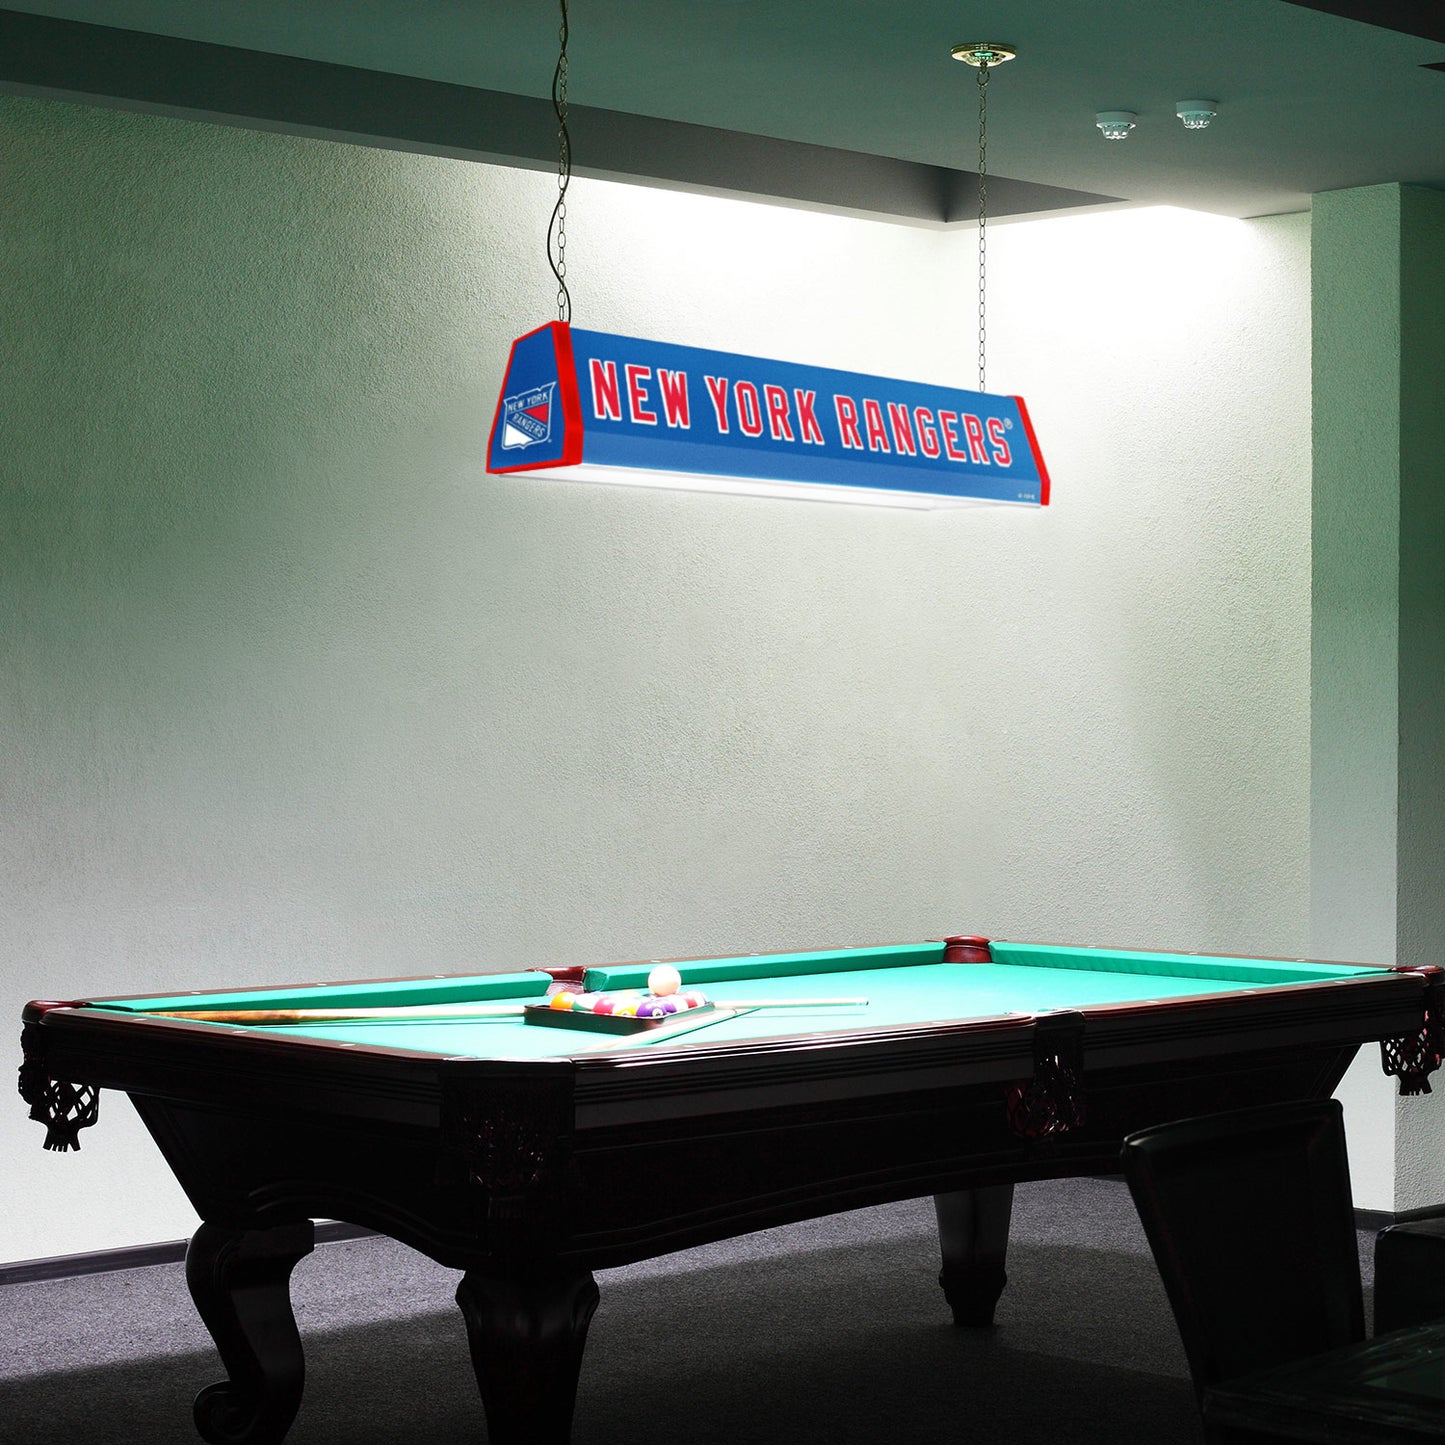 New York Rangers Standard Pool Table Light Room View